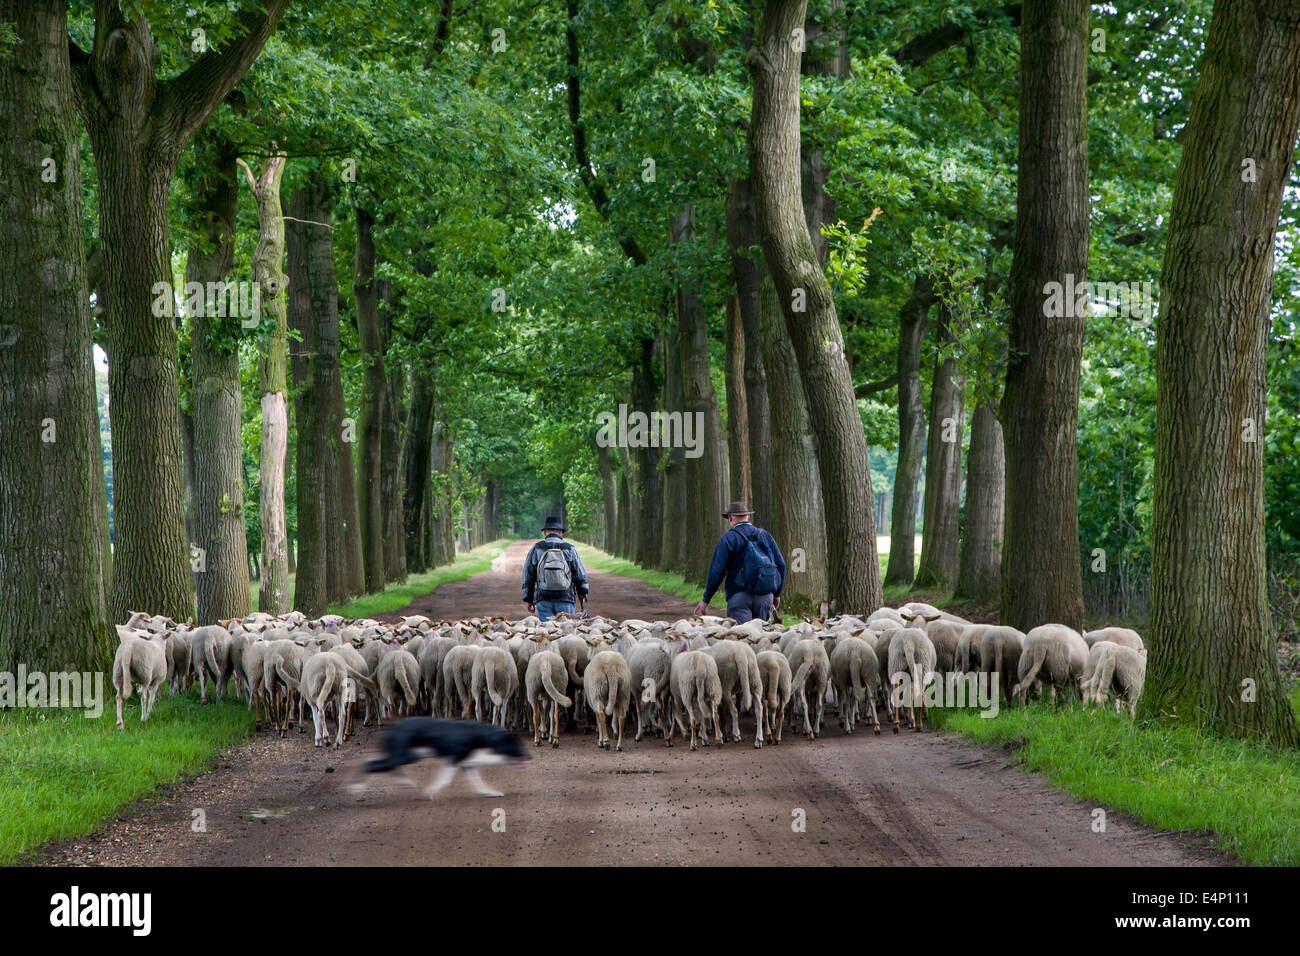 Two shepherds with sheepdog herding flock of white sheep along lane bordered with trees Stock Photo